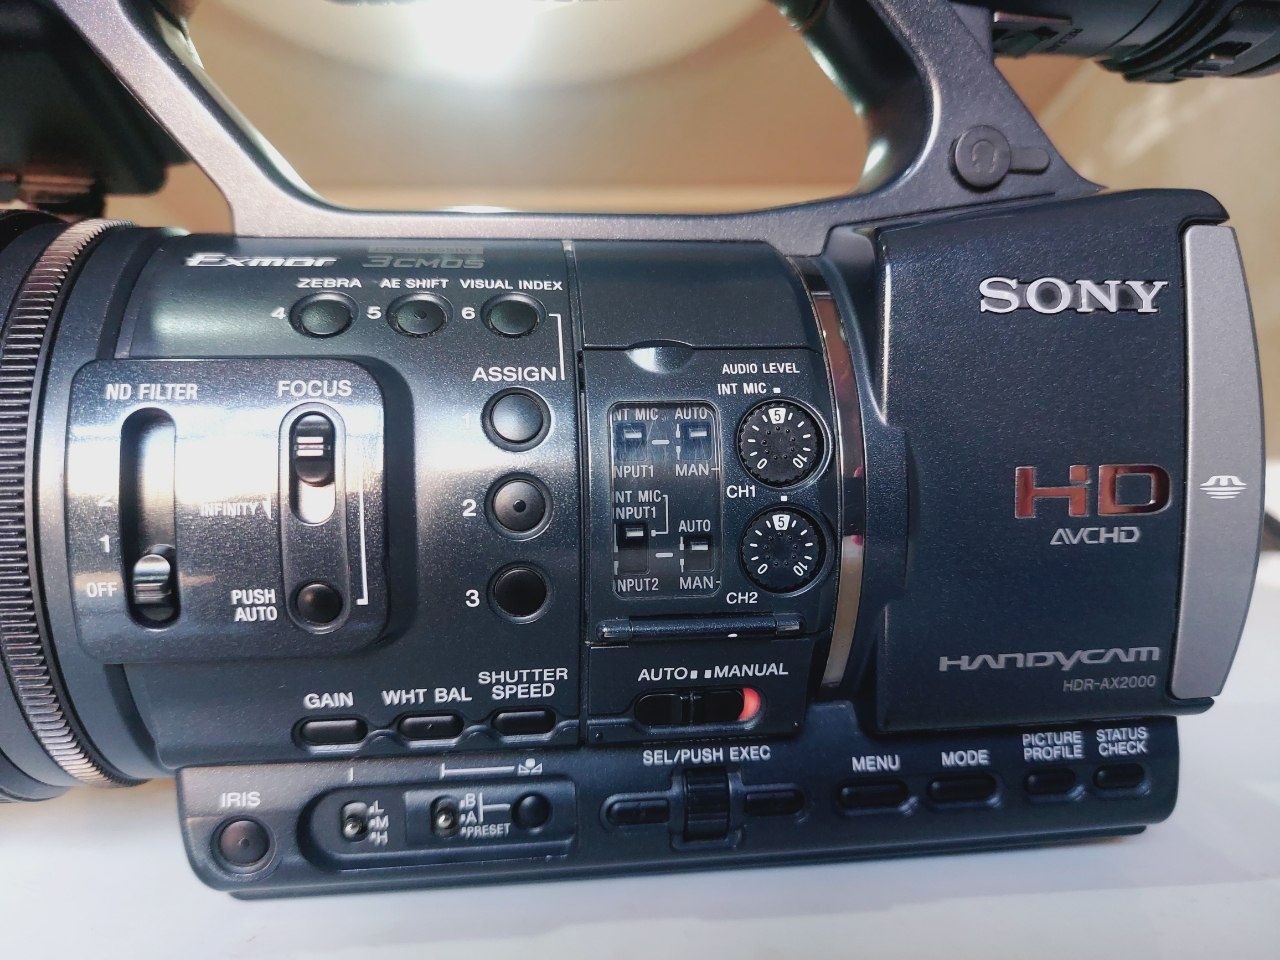 HDR-AX 2000 kamera